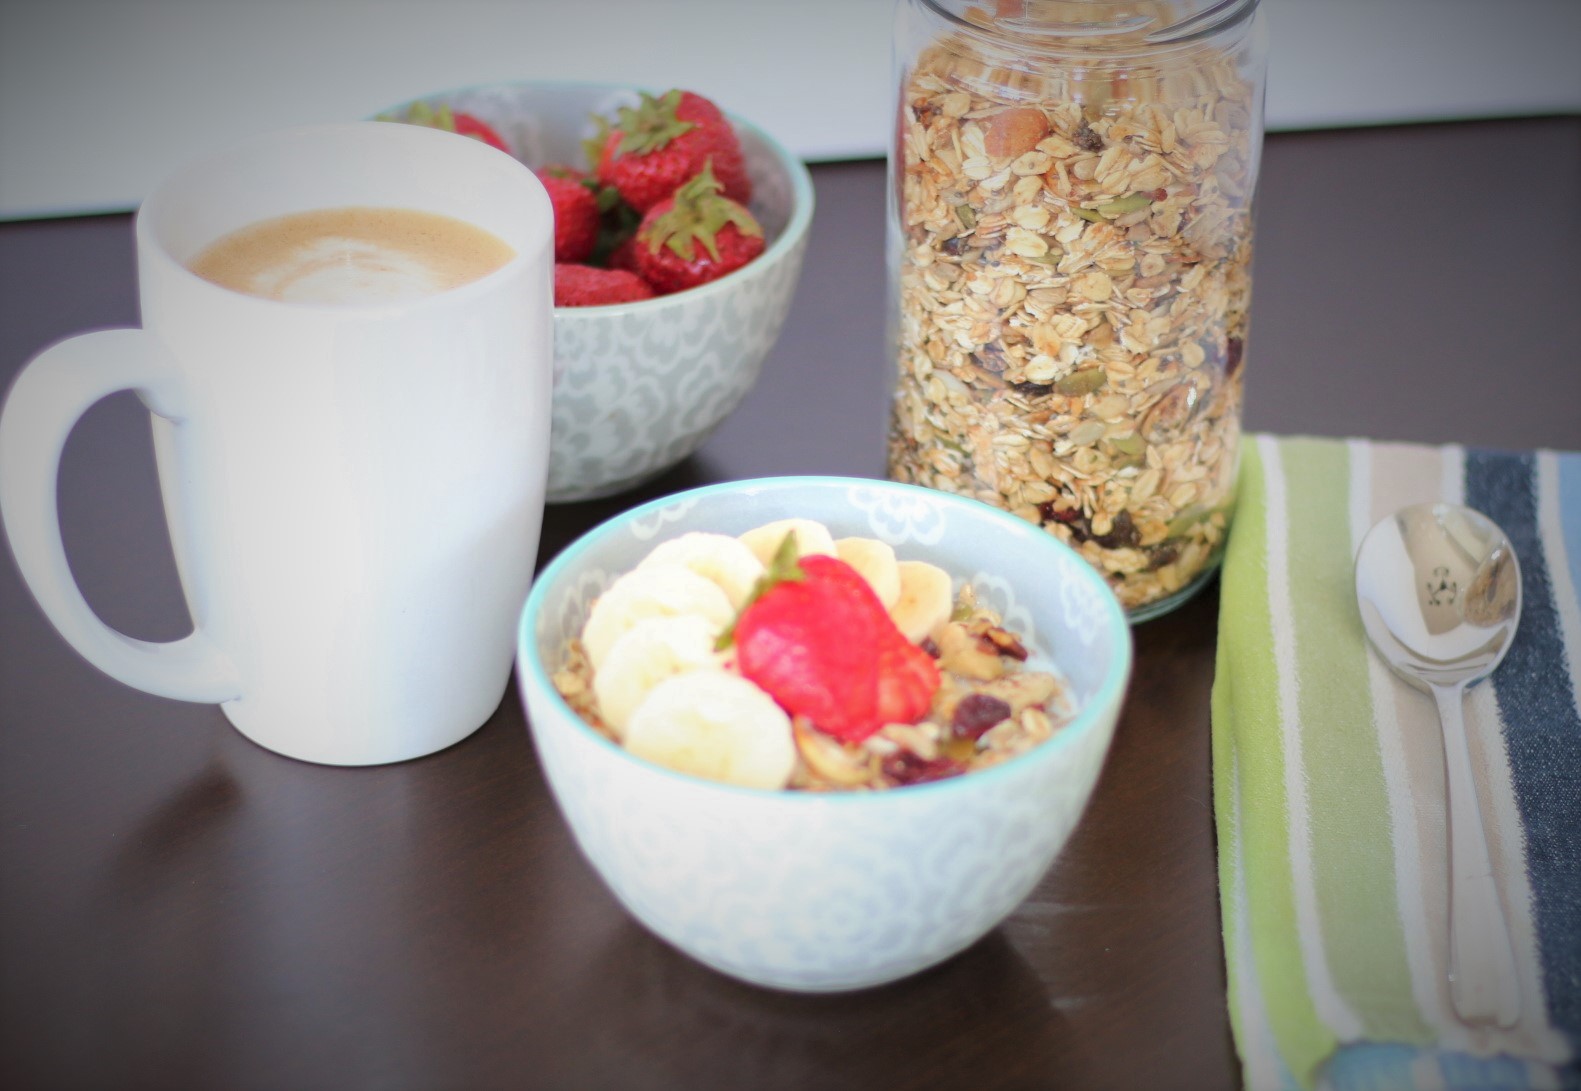 Breakfast scene with toasted muesli, coffee and strawberries.